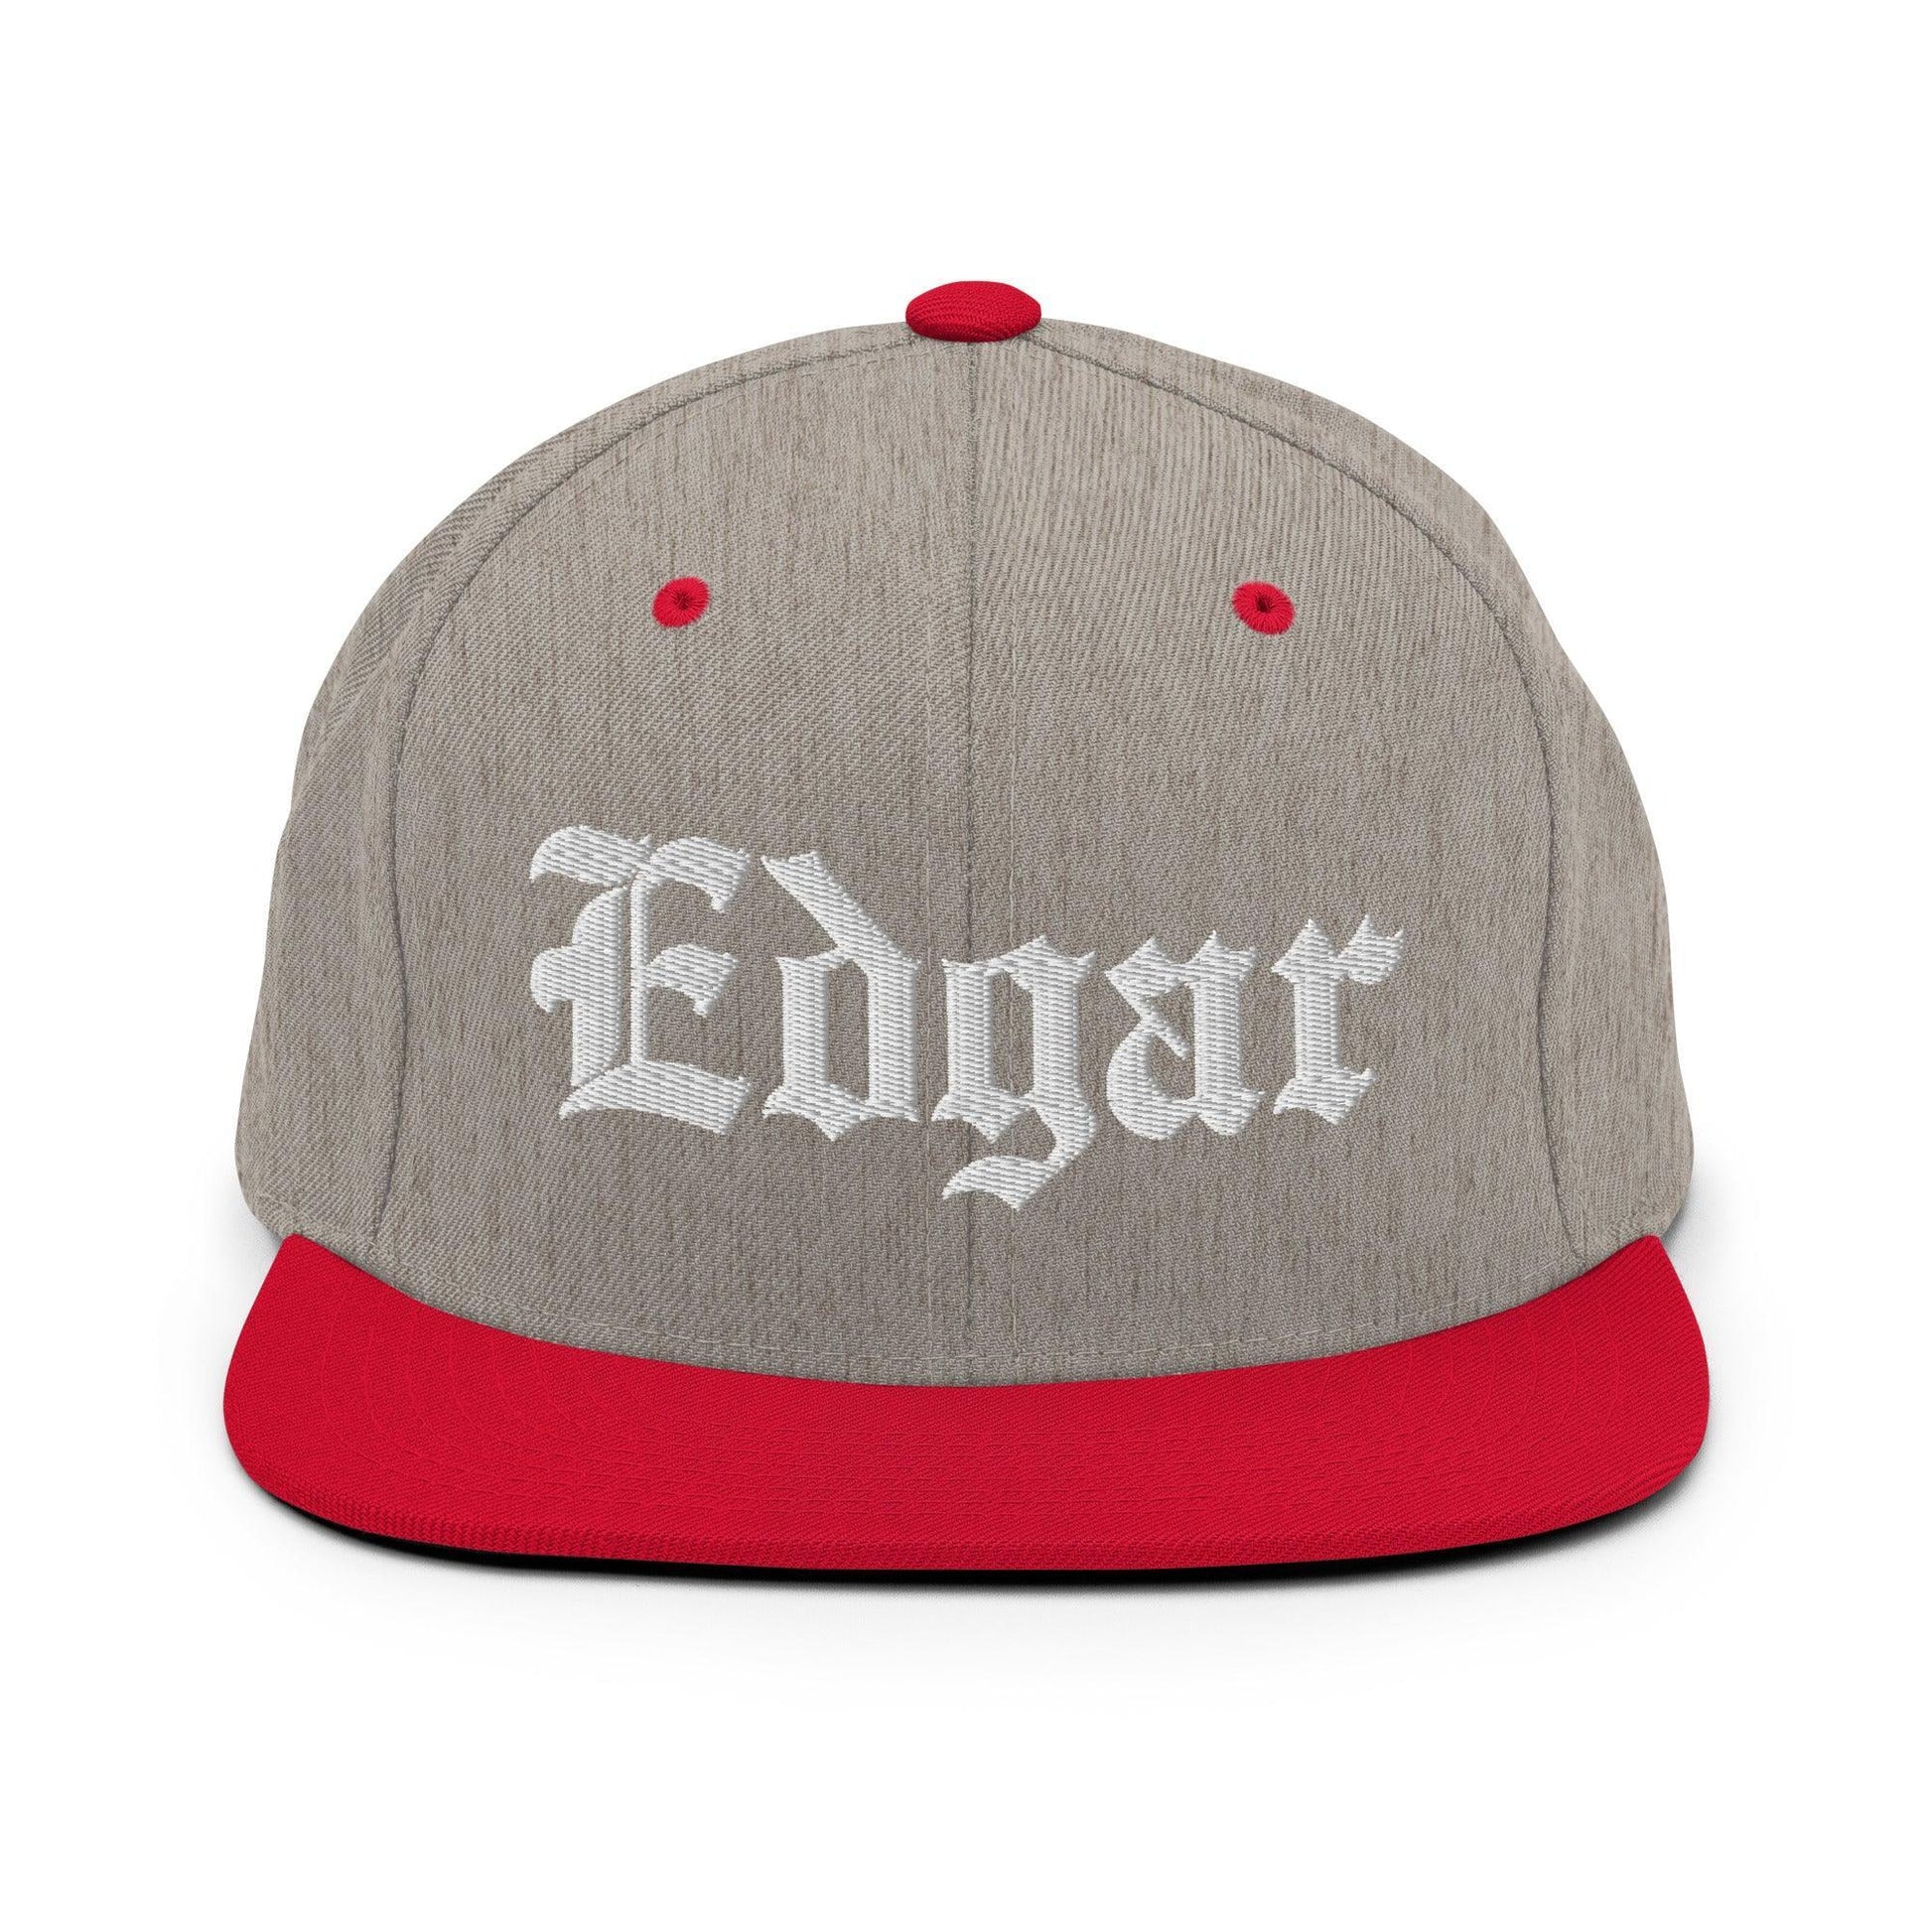 Edgar Old English Snapback Hat Heather Grey/ Red